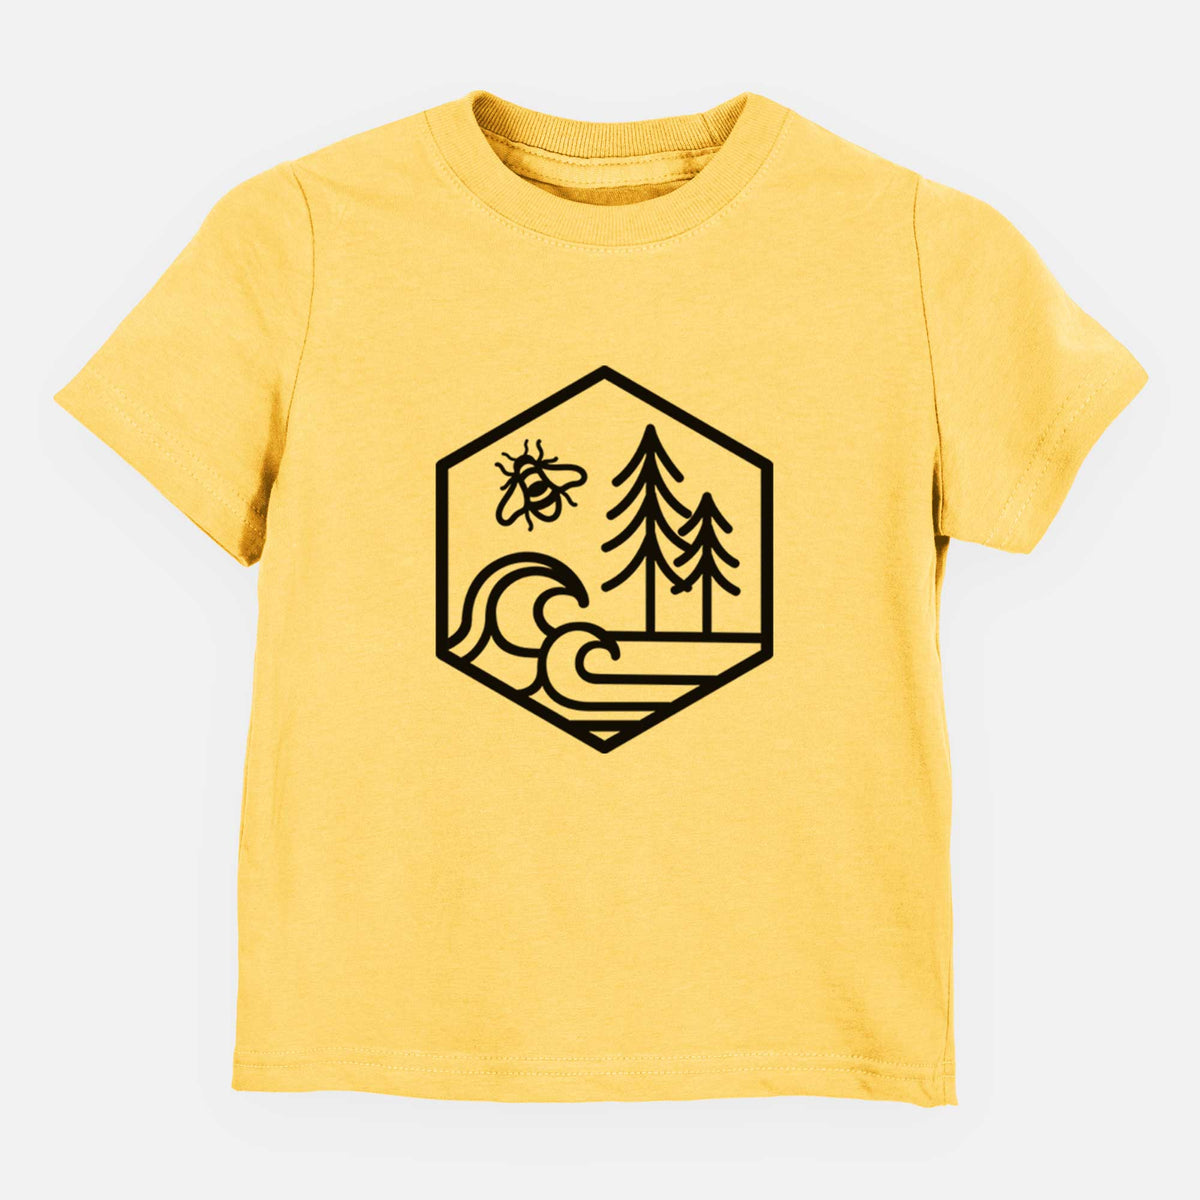 Harmonious Hexagon - Bees, Seas, Trees - Kids Shirt